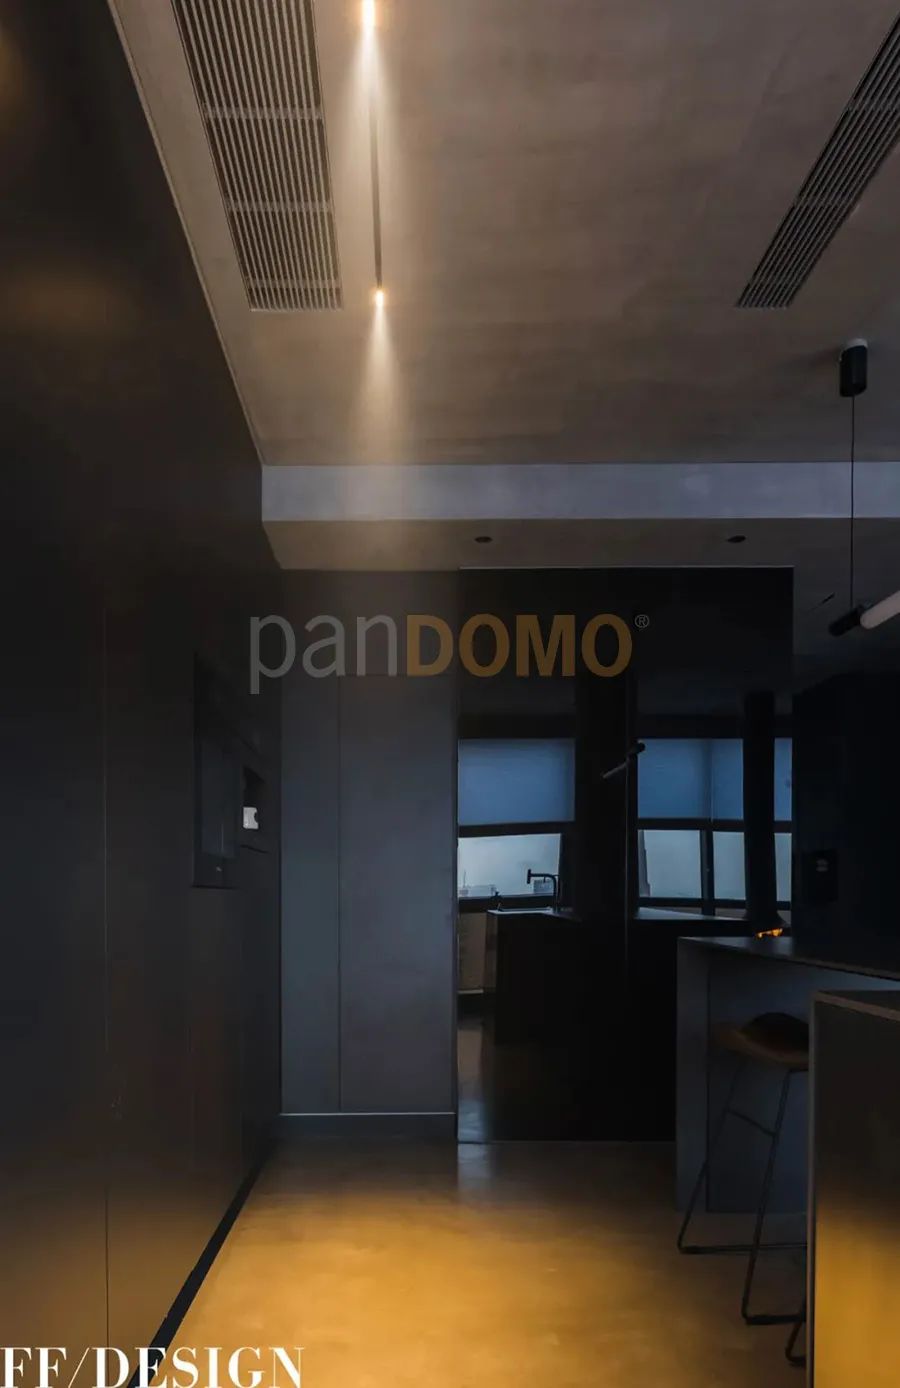 panDOMO塑造纯黑极简治愈风